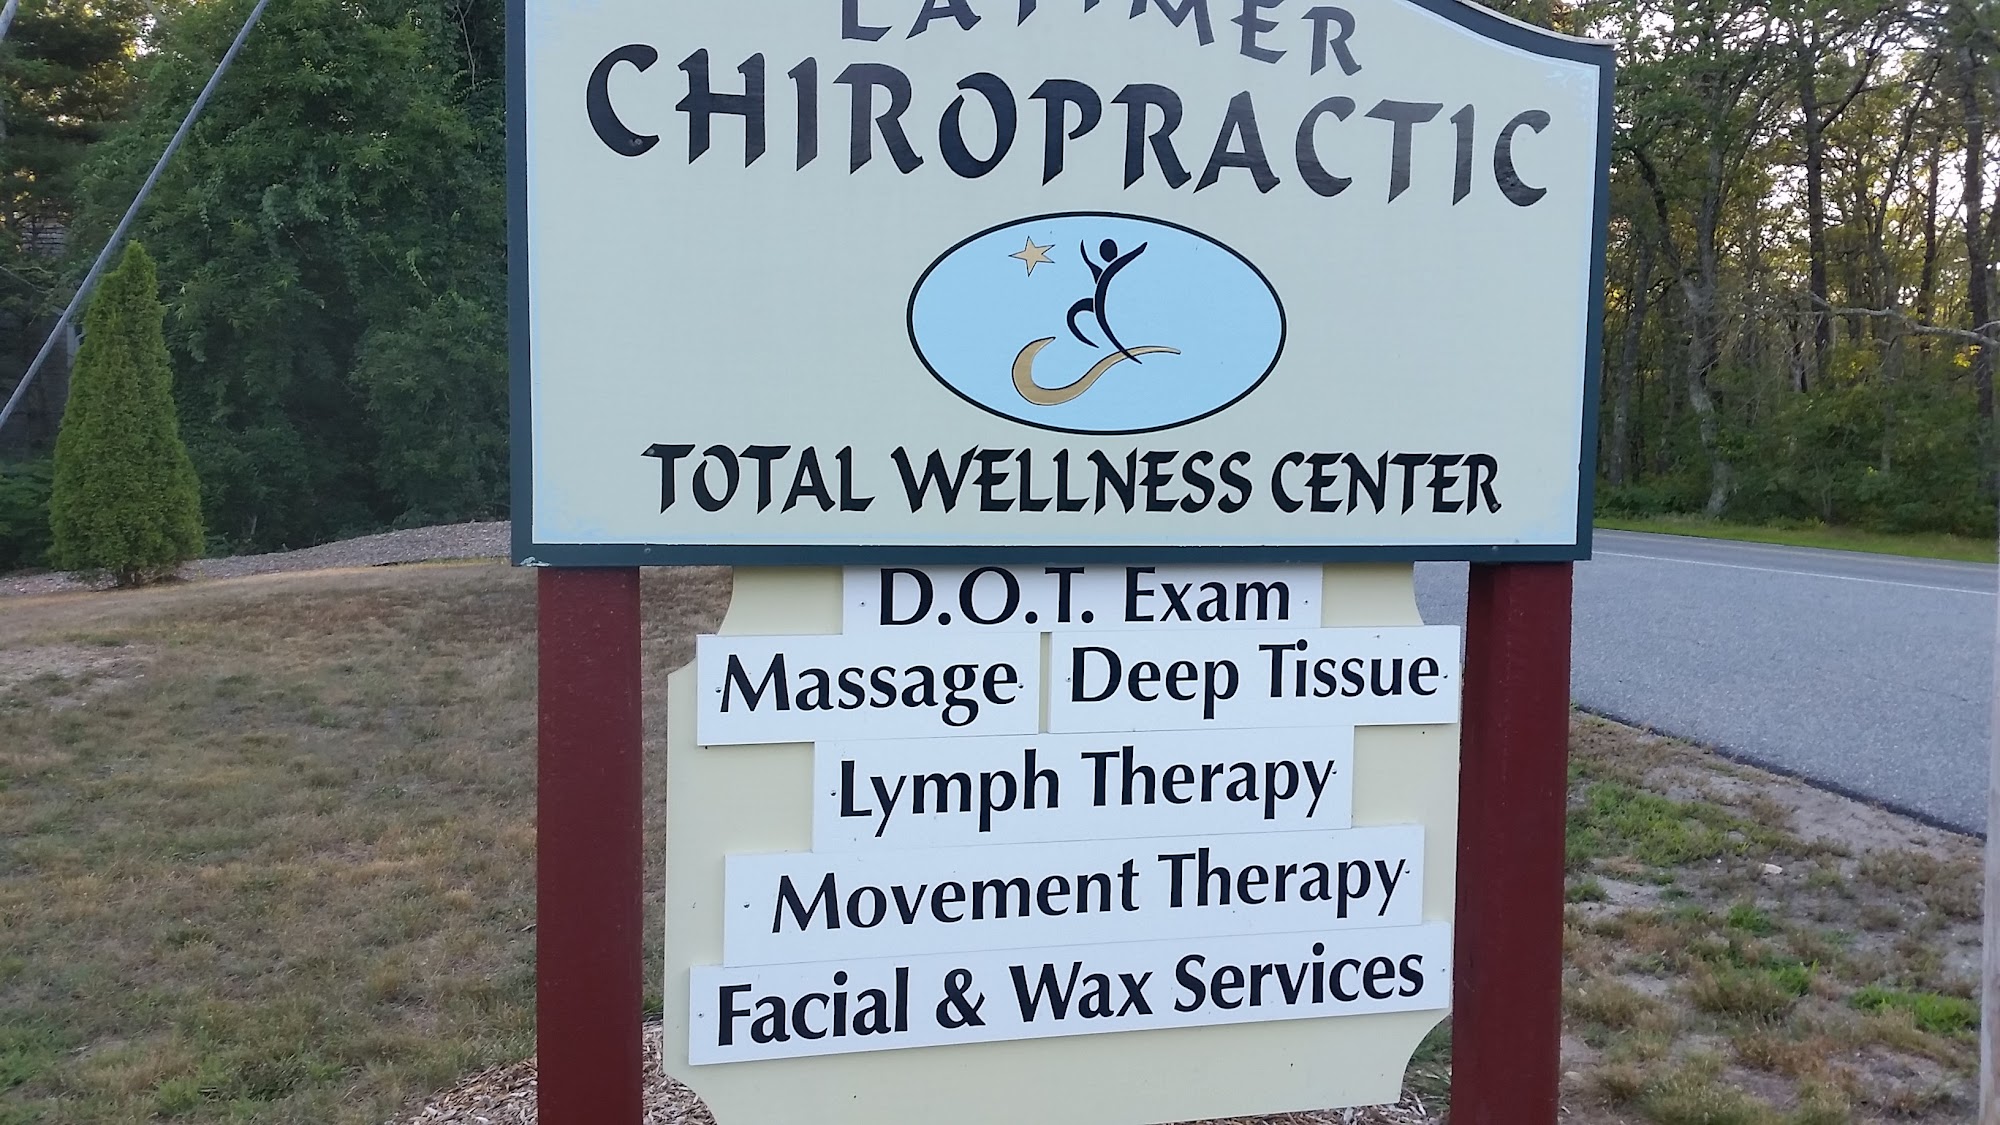 Latimer Chiropractic Total Wellness Center 1599 Orleans-Harwich Rd, Harwich Massachusetts 02645